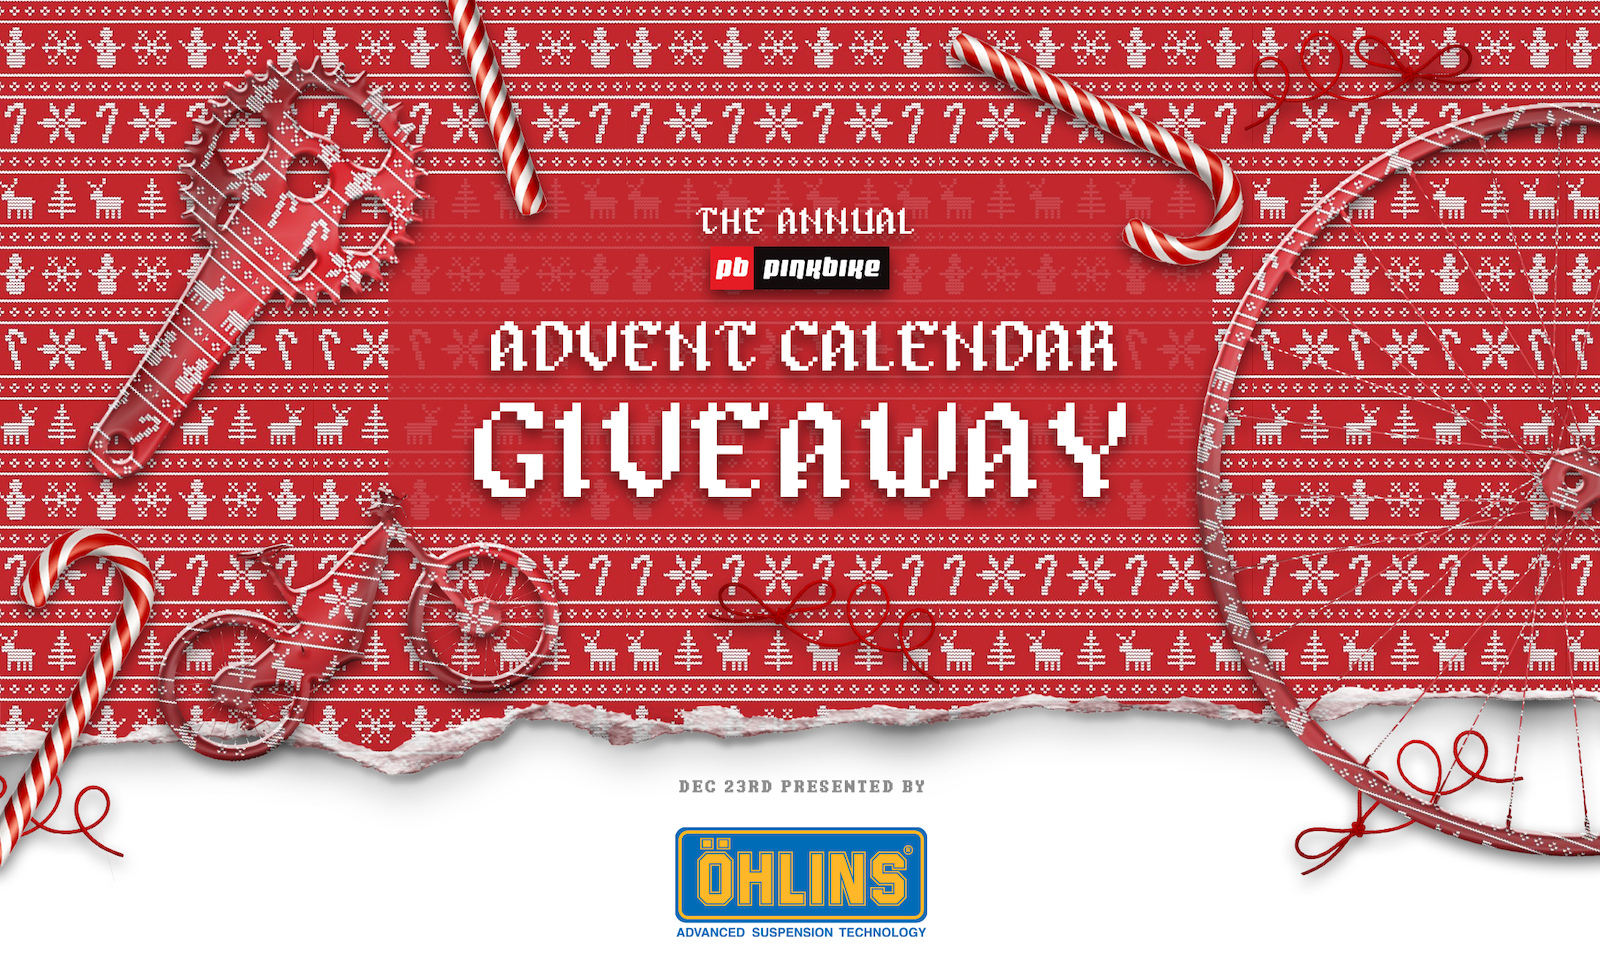 Enter to Win An Öhlins Rear Shock Pinkbike's Advent Calendar Giveaway